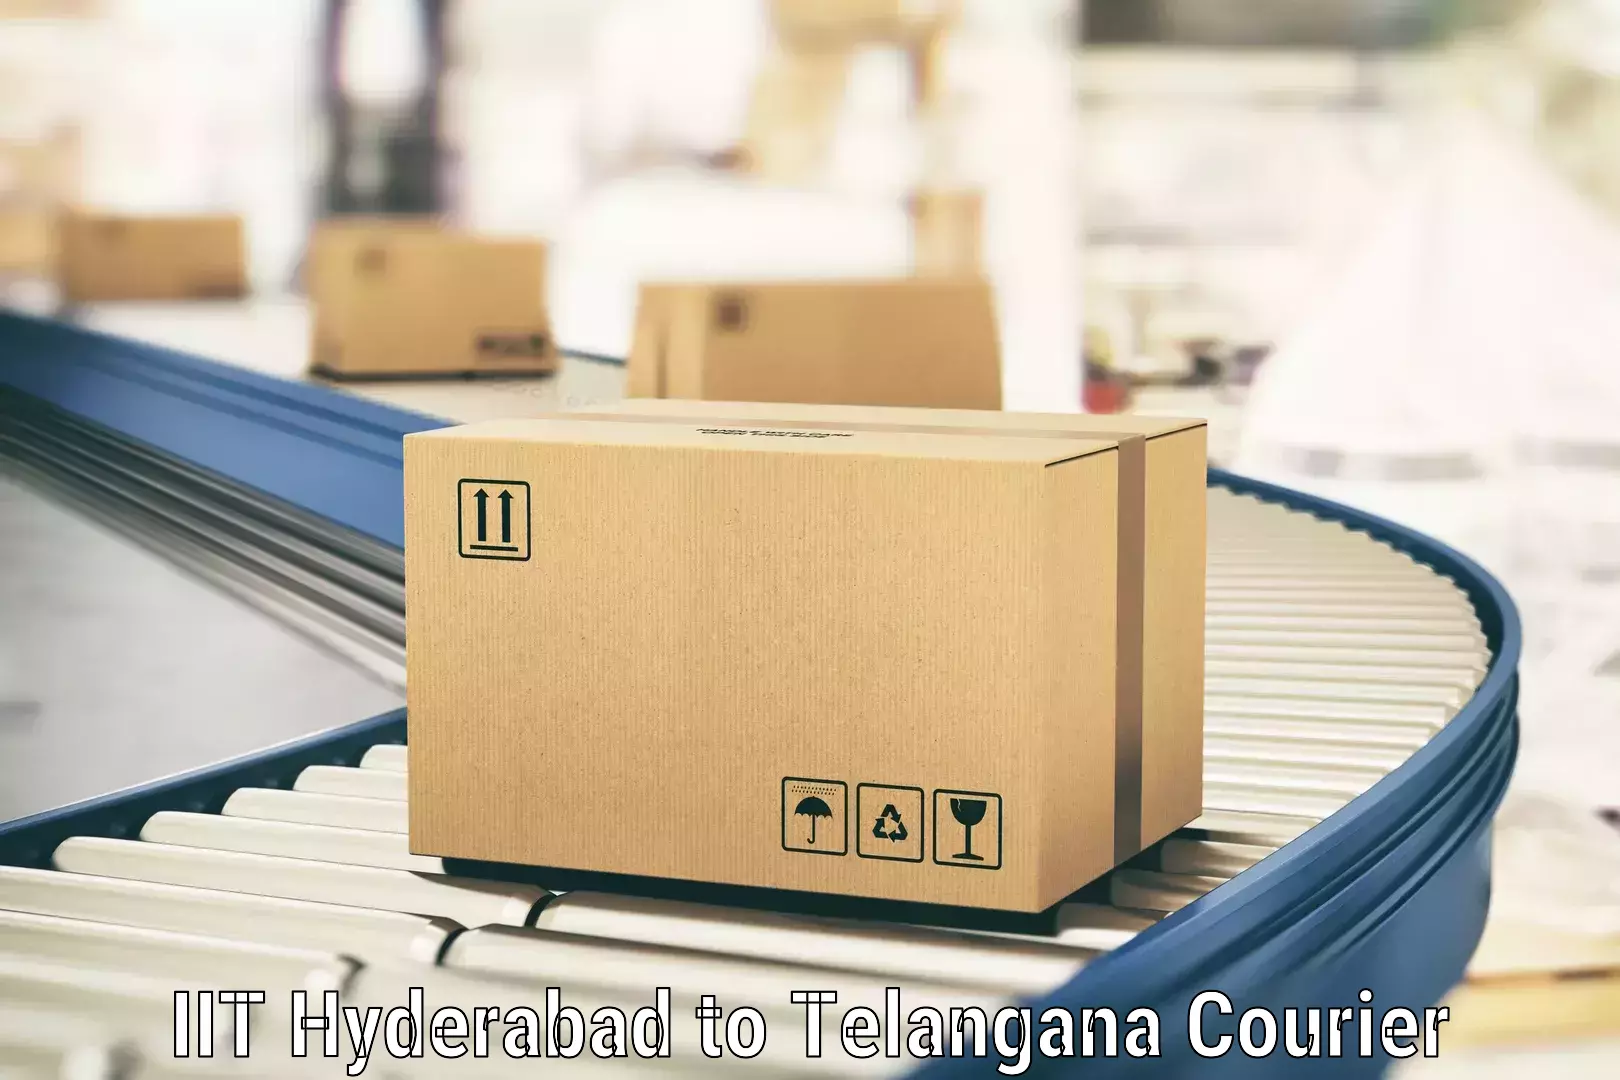 Premium delivery services in IIT Hyderabad to Manneguda